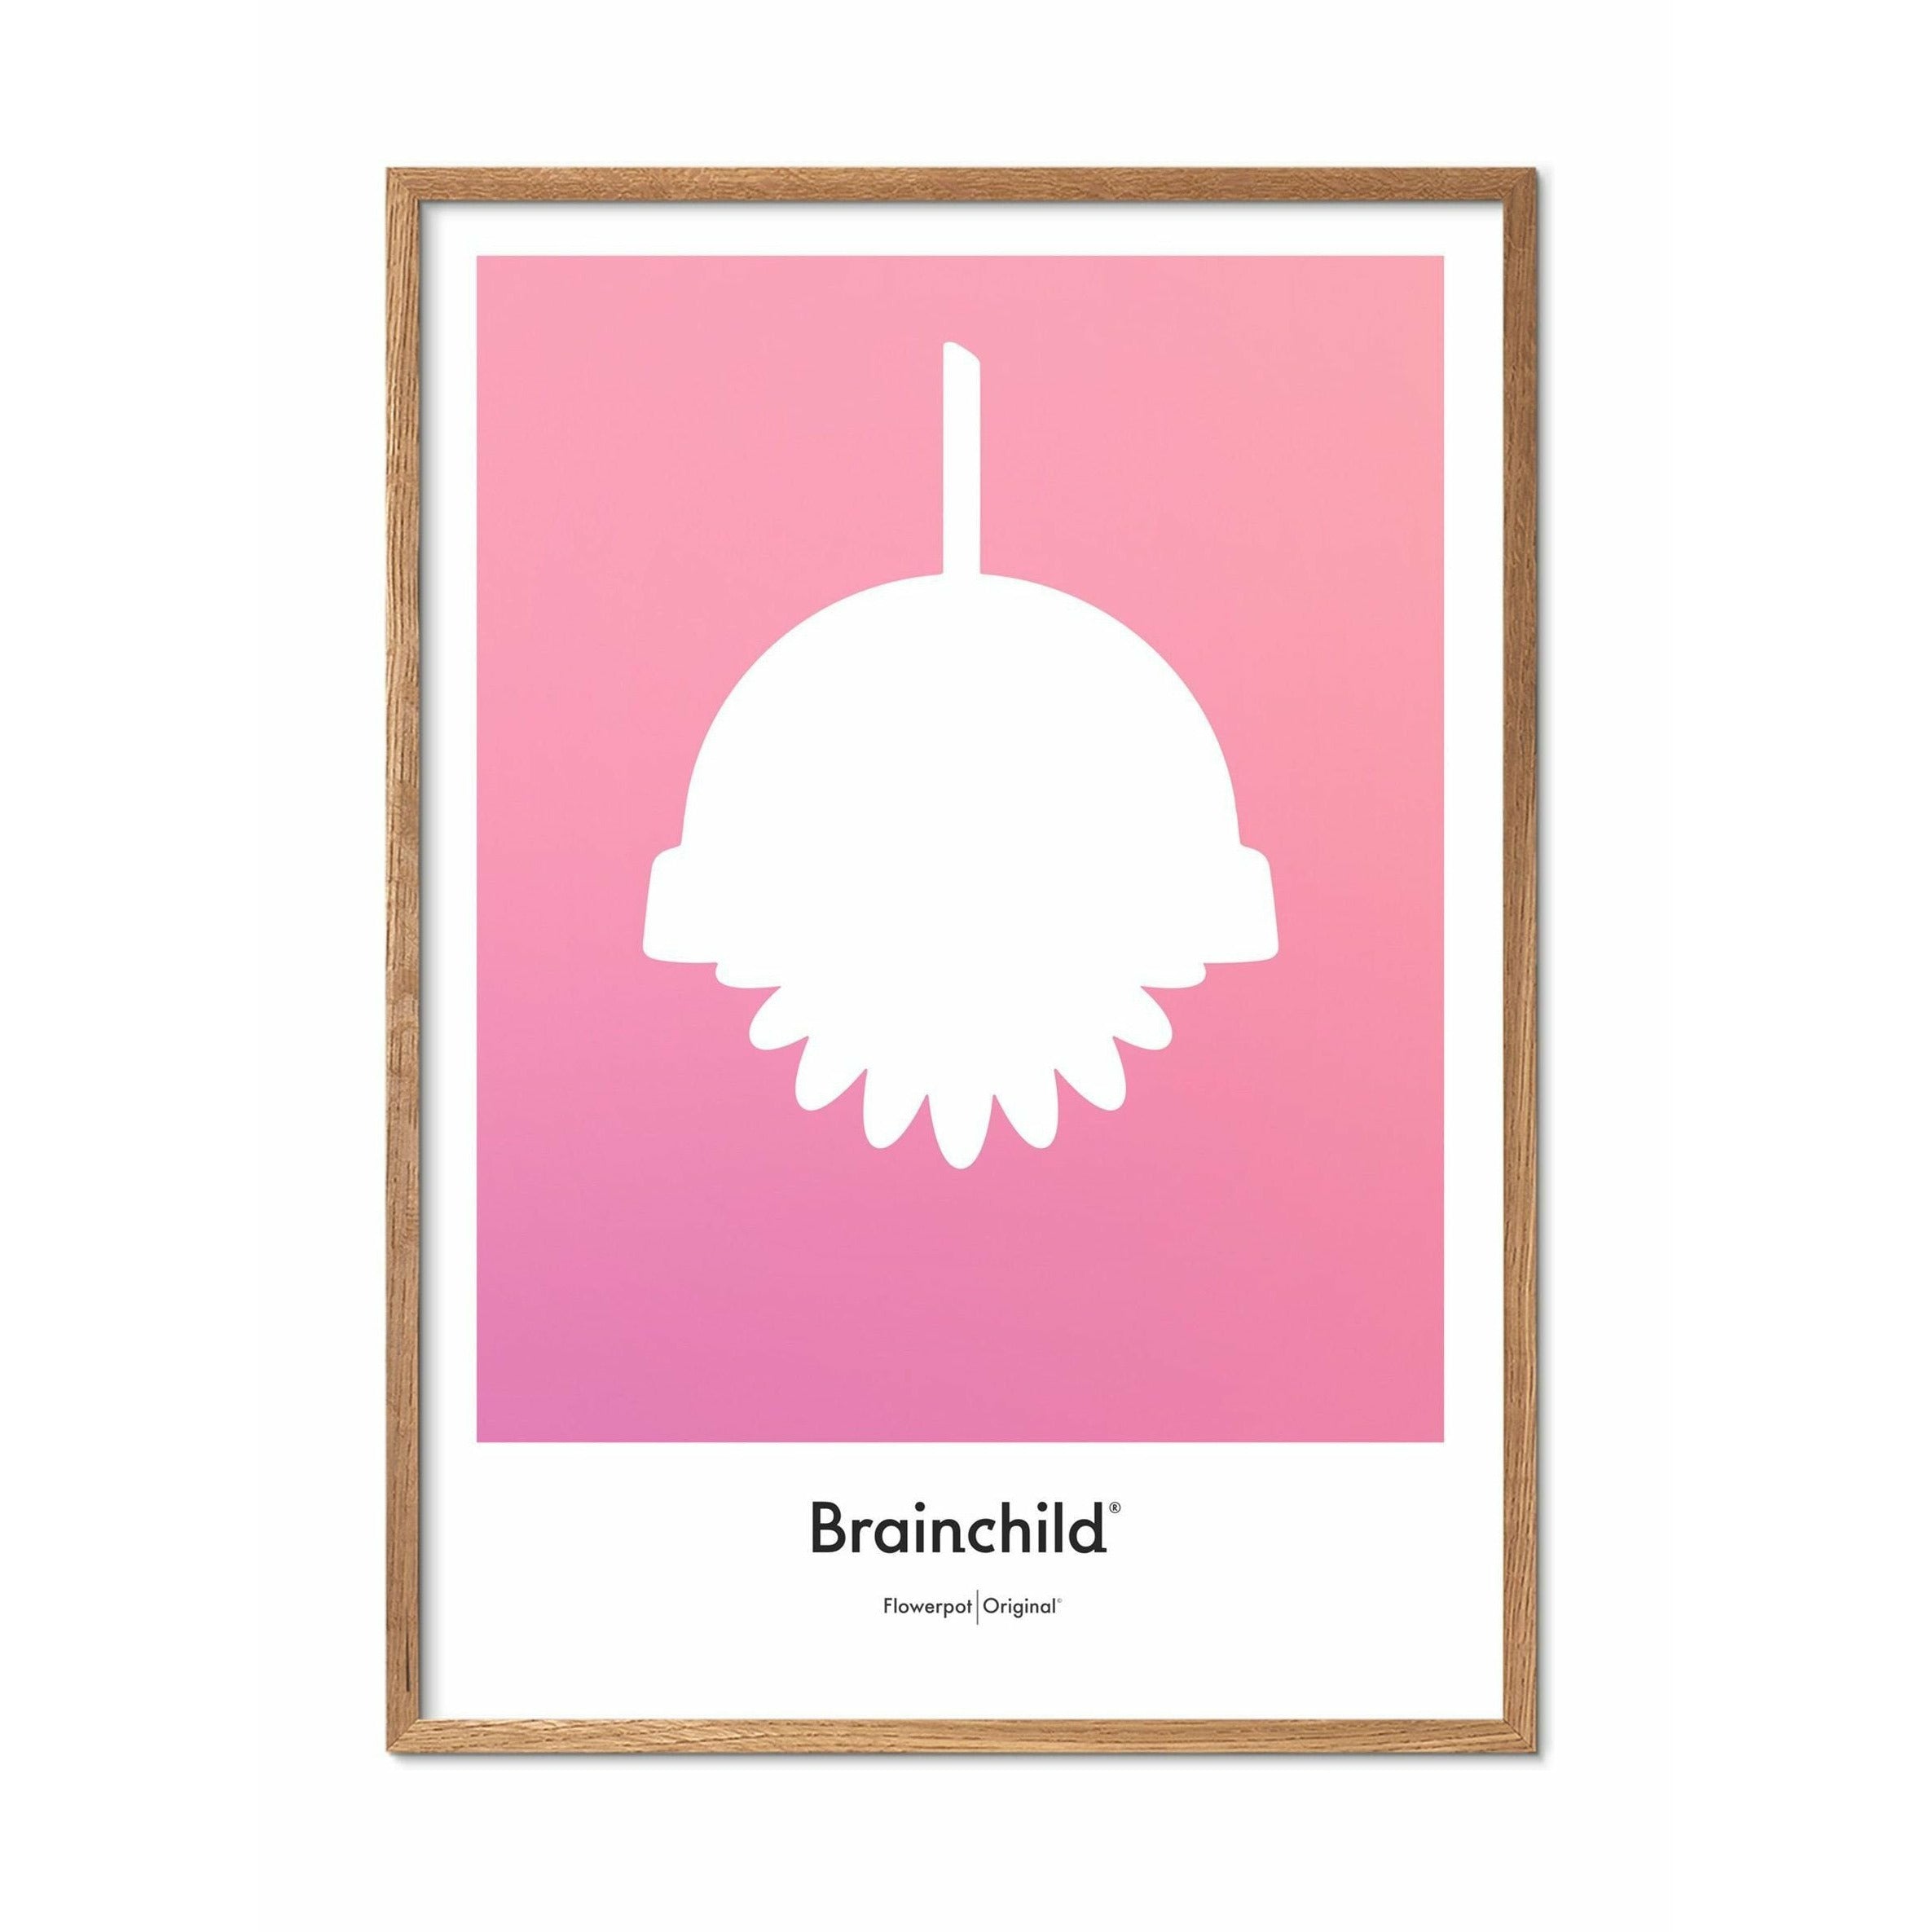 Brainchild Blumentopf Design Icon Poster, Rahmen aus hellem Holz 30x40 Cm, Rosa